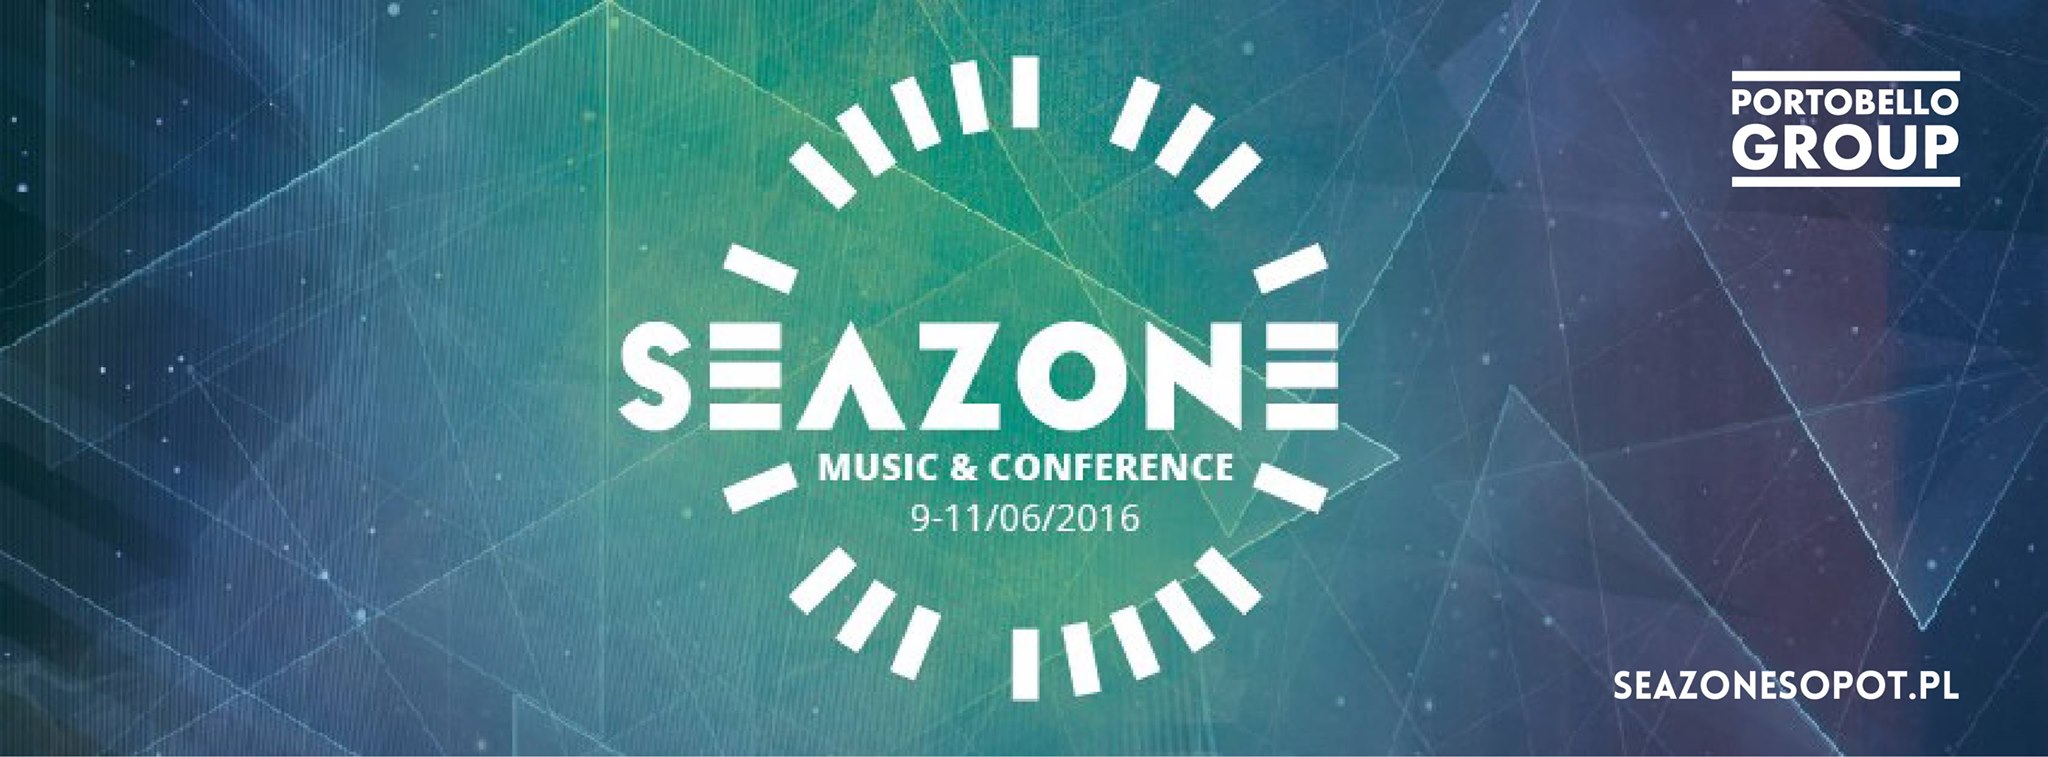 Seazone Music & Conference Sopot 2016 - zmiany! SeaZone Music & Conference 111se